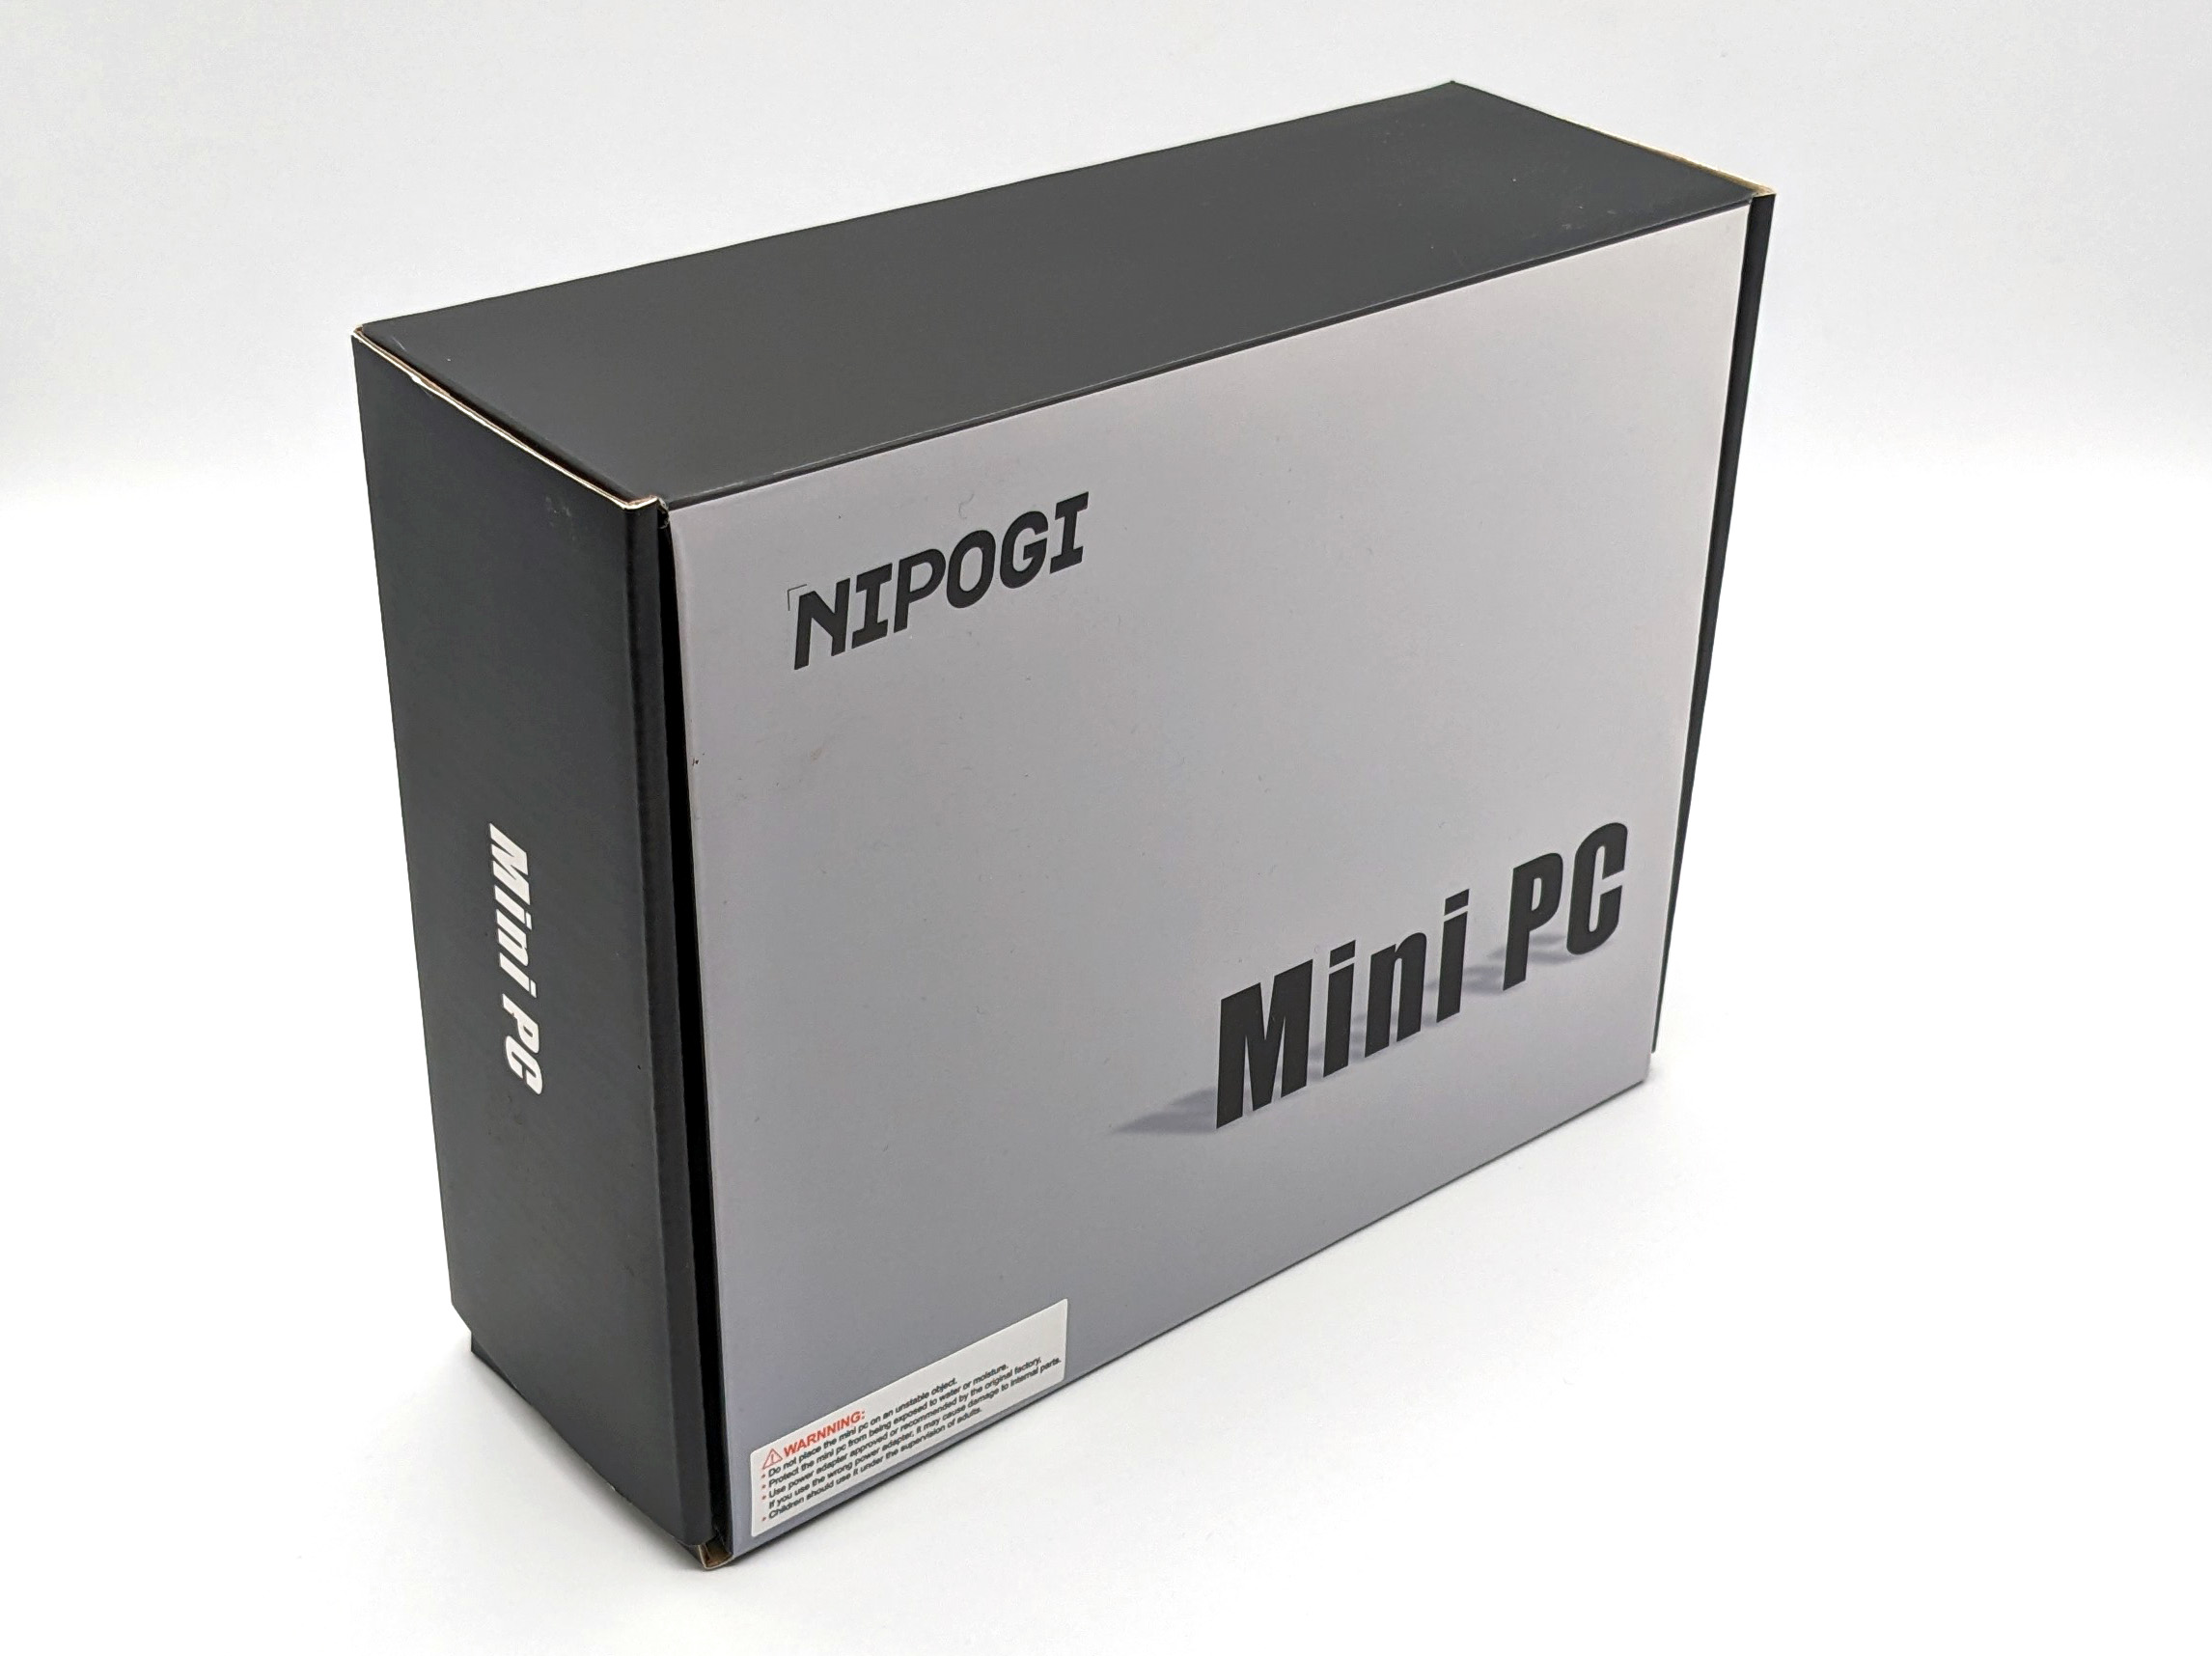 Newly Released Nipogi Mini PC UNBOXING 